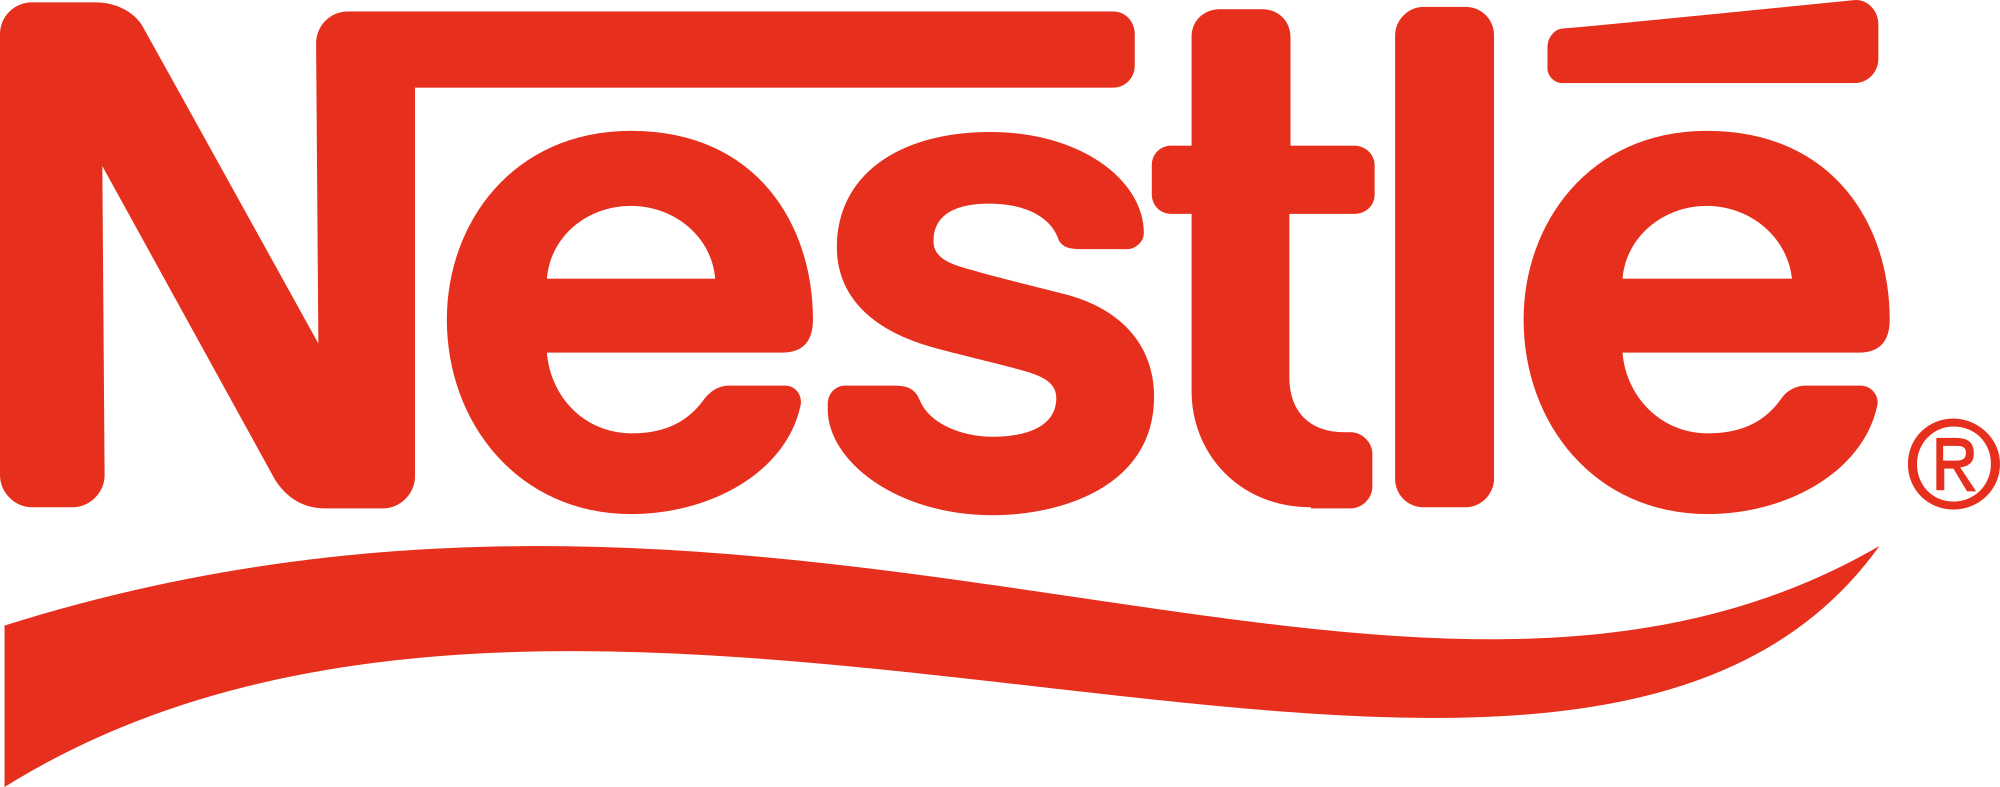 Nestlé Logo - logo-nestle-png-nestle-logo-12-2000 - Contentine